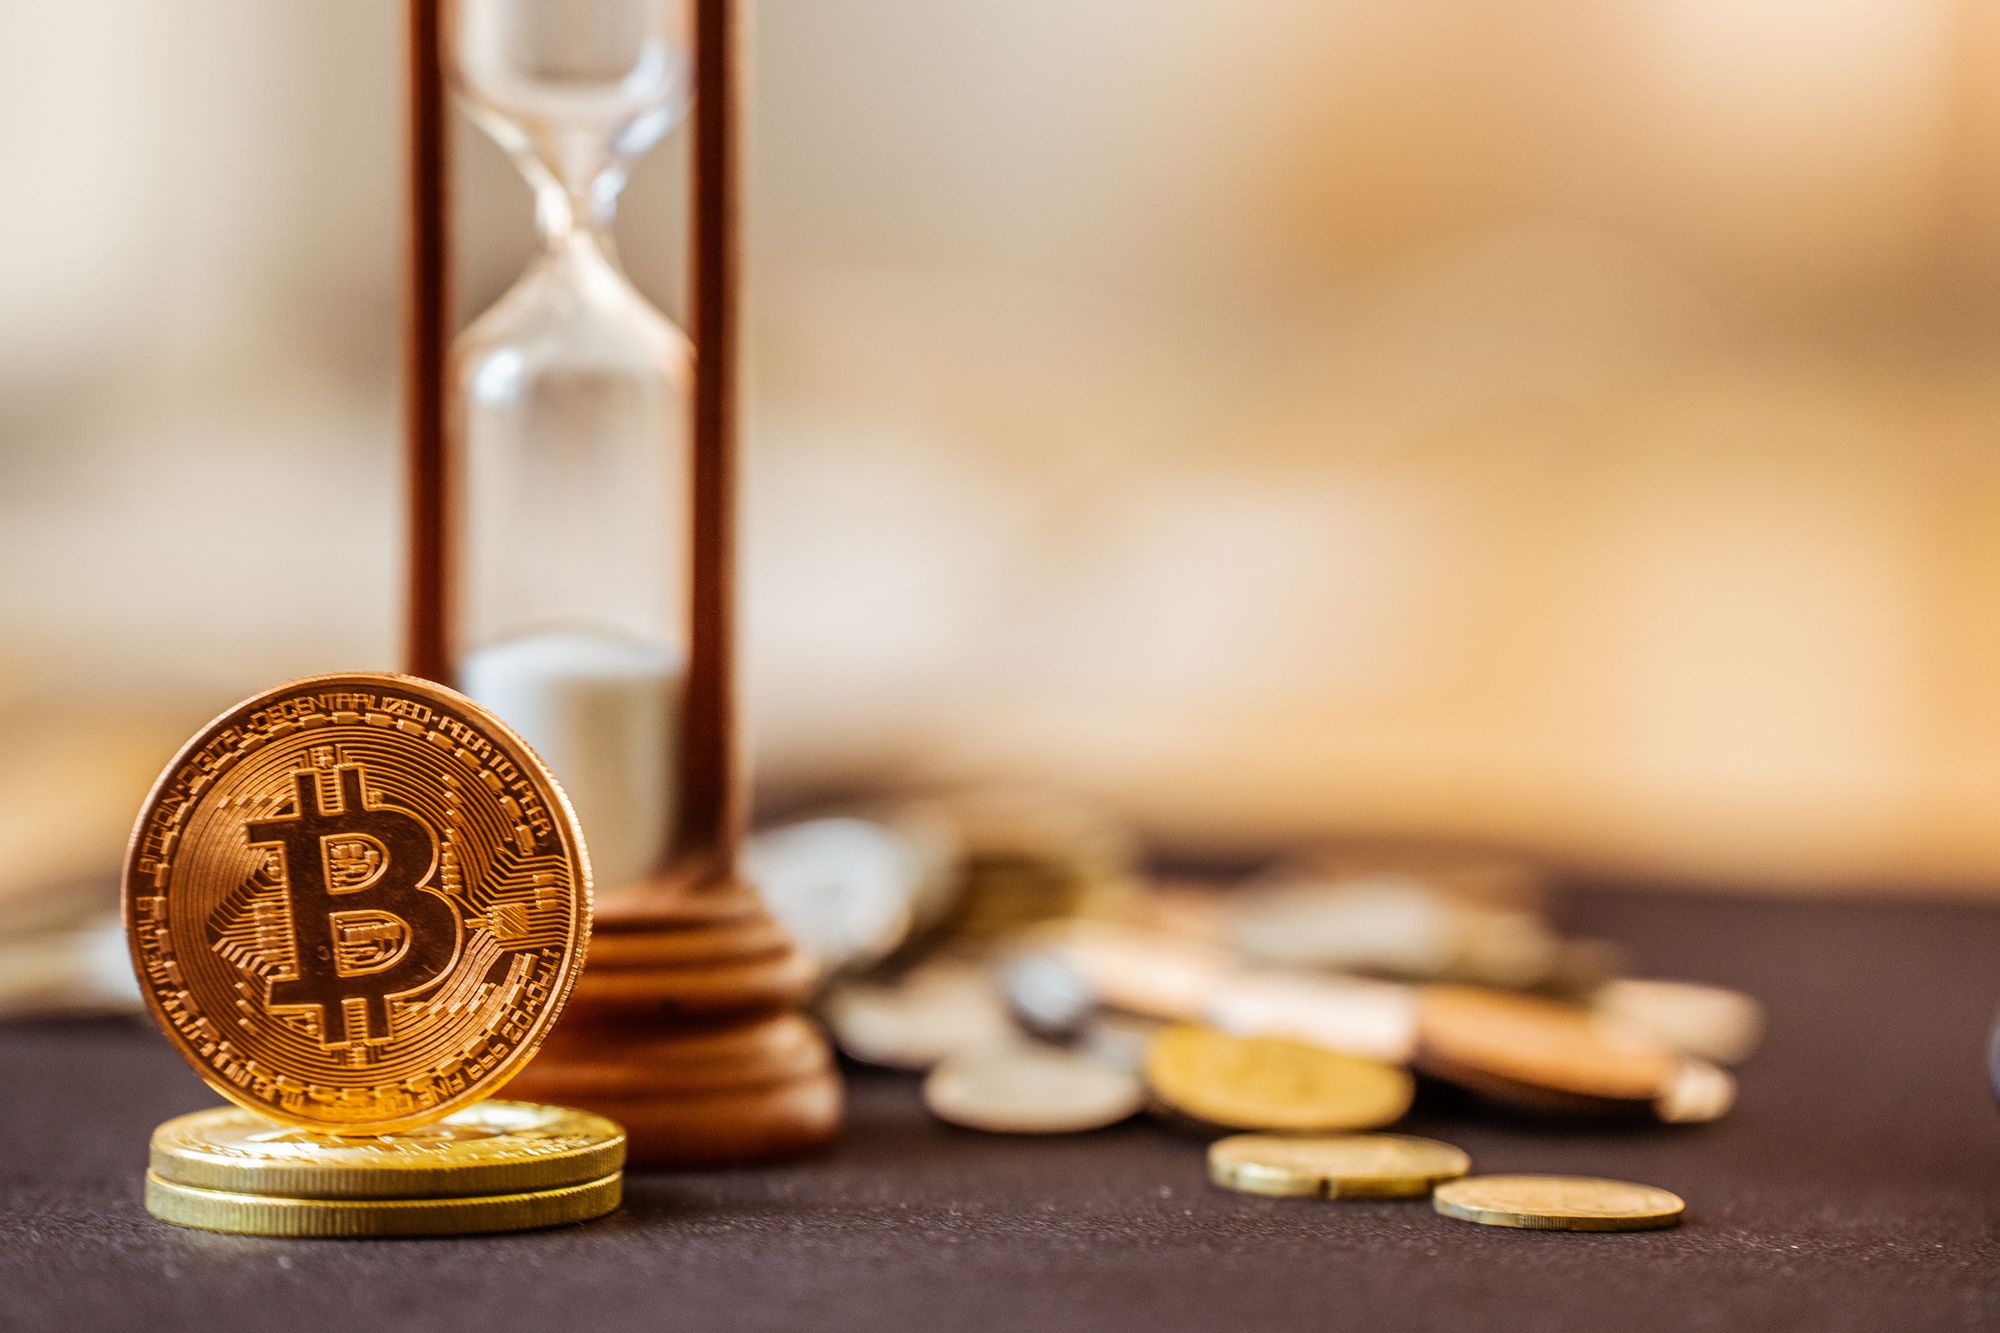 Bitcoins next to an hourglass